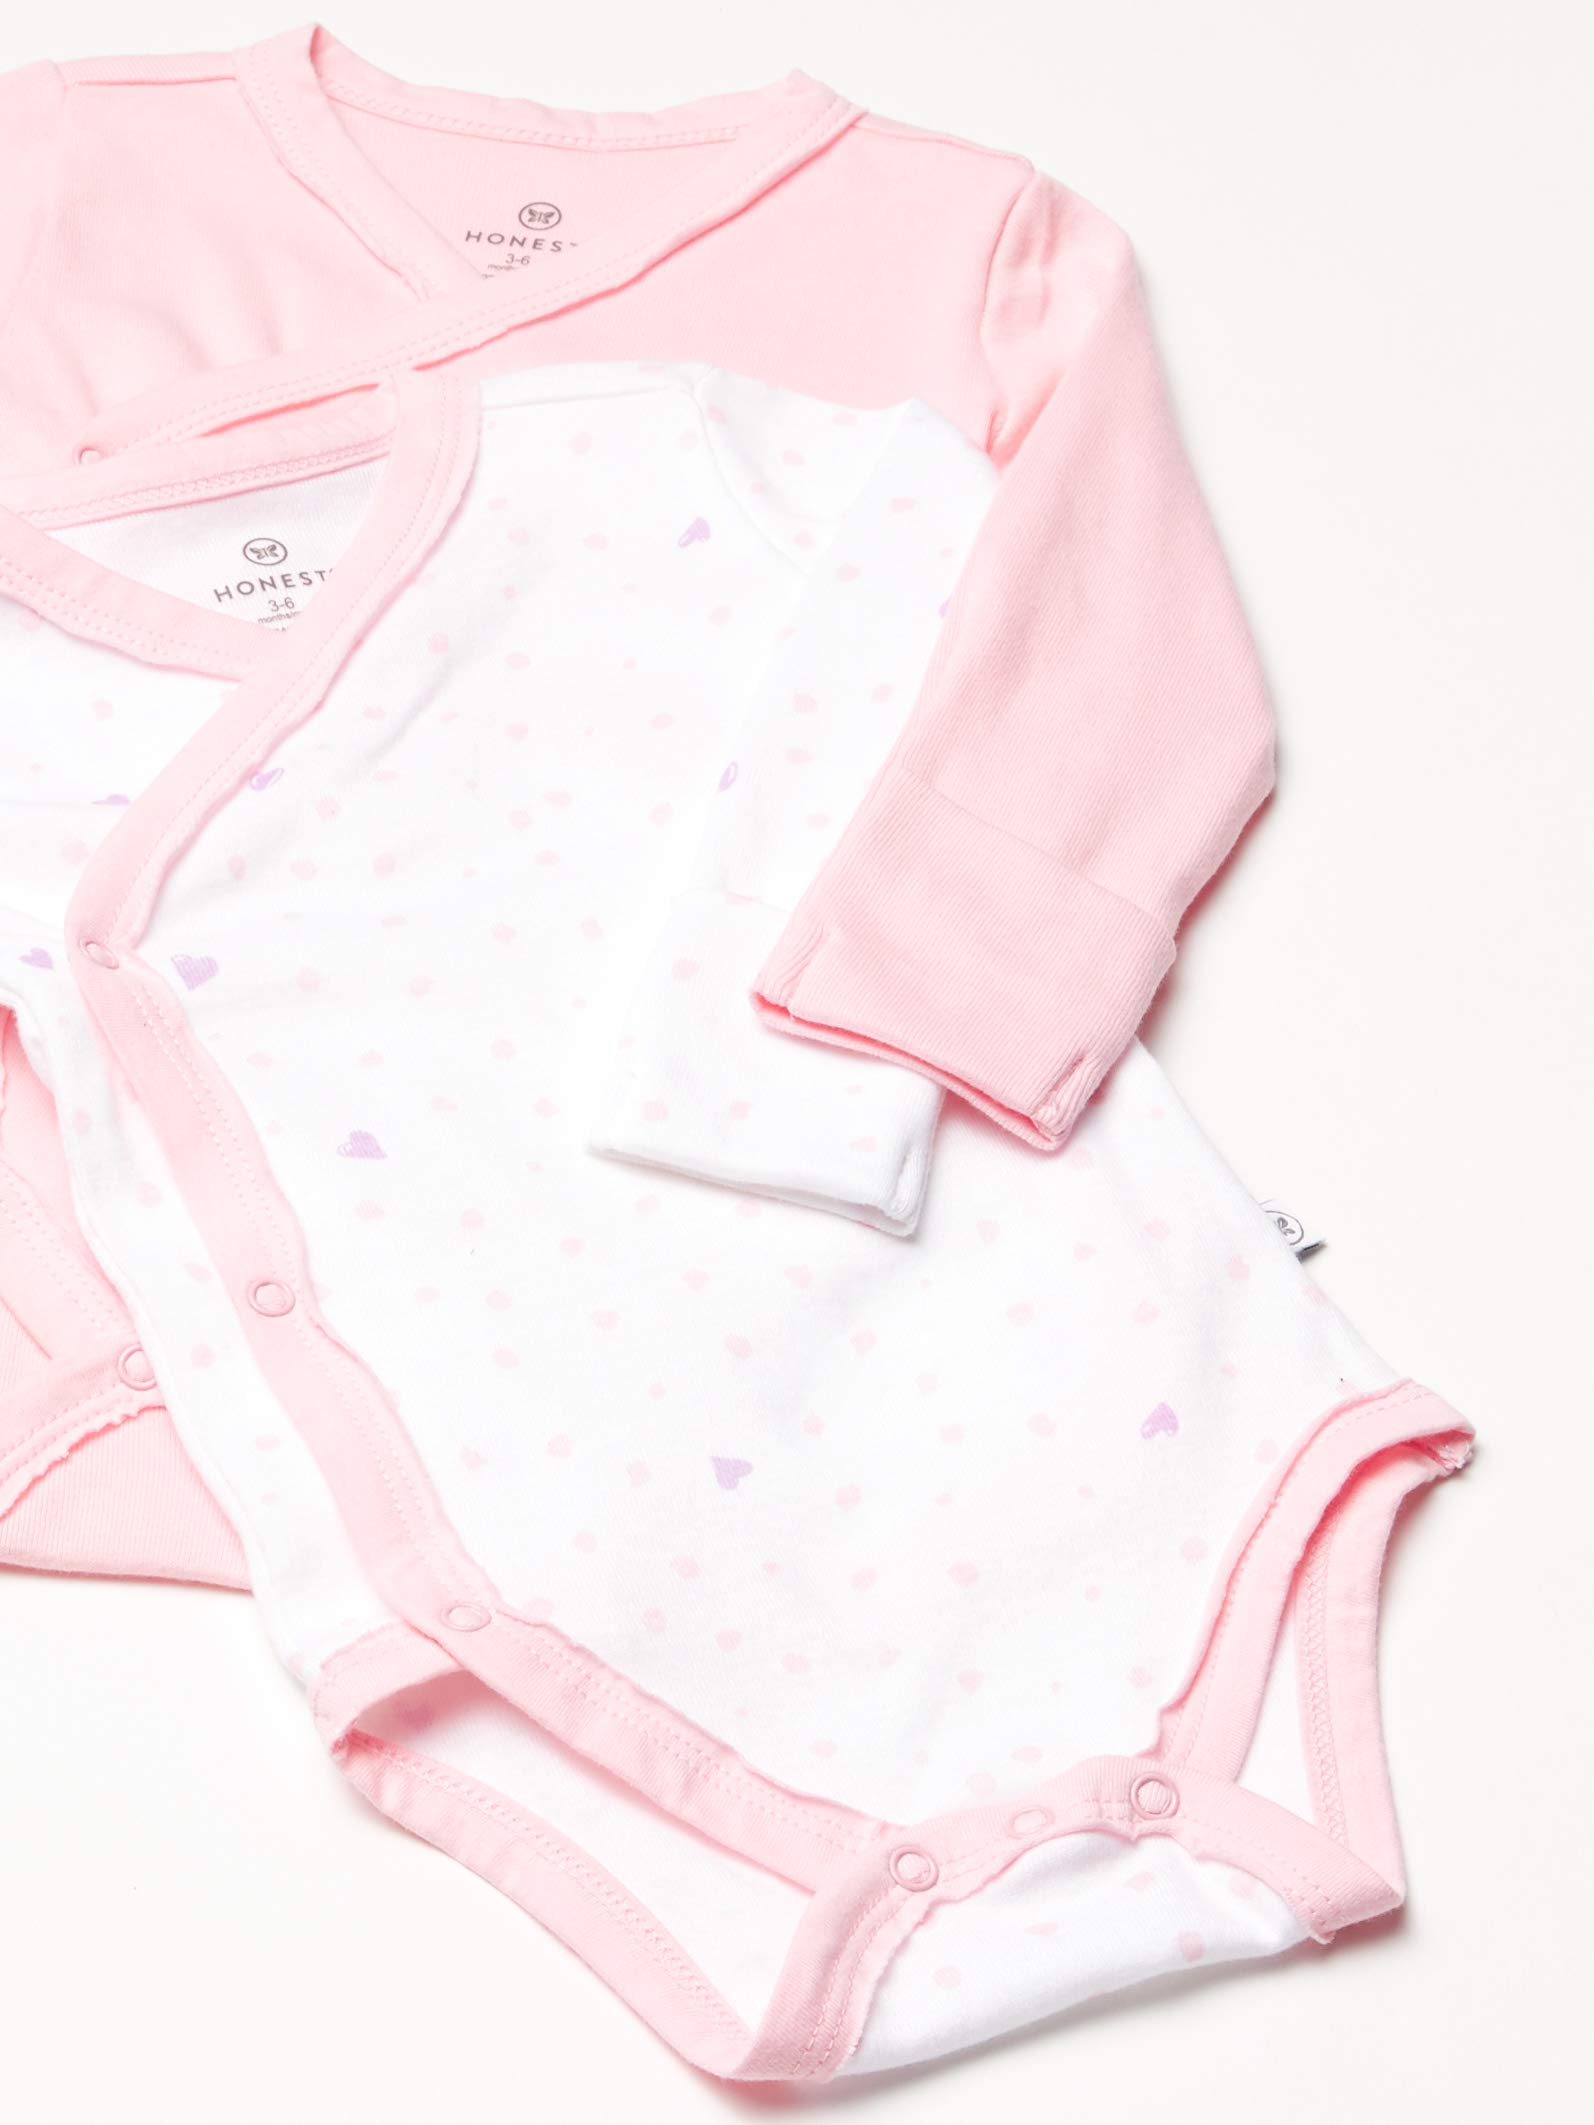 HonestBaby 3-Pack Long Sleeve Side-Snap Kimono Bodysuits Newborn for Infant Baby Girls 100% Organic Cotton